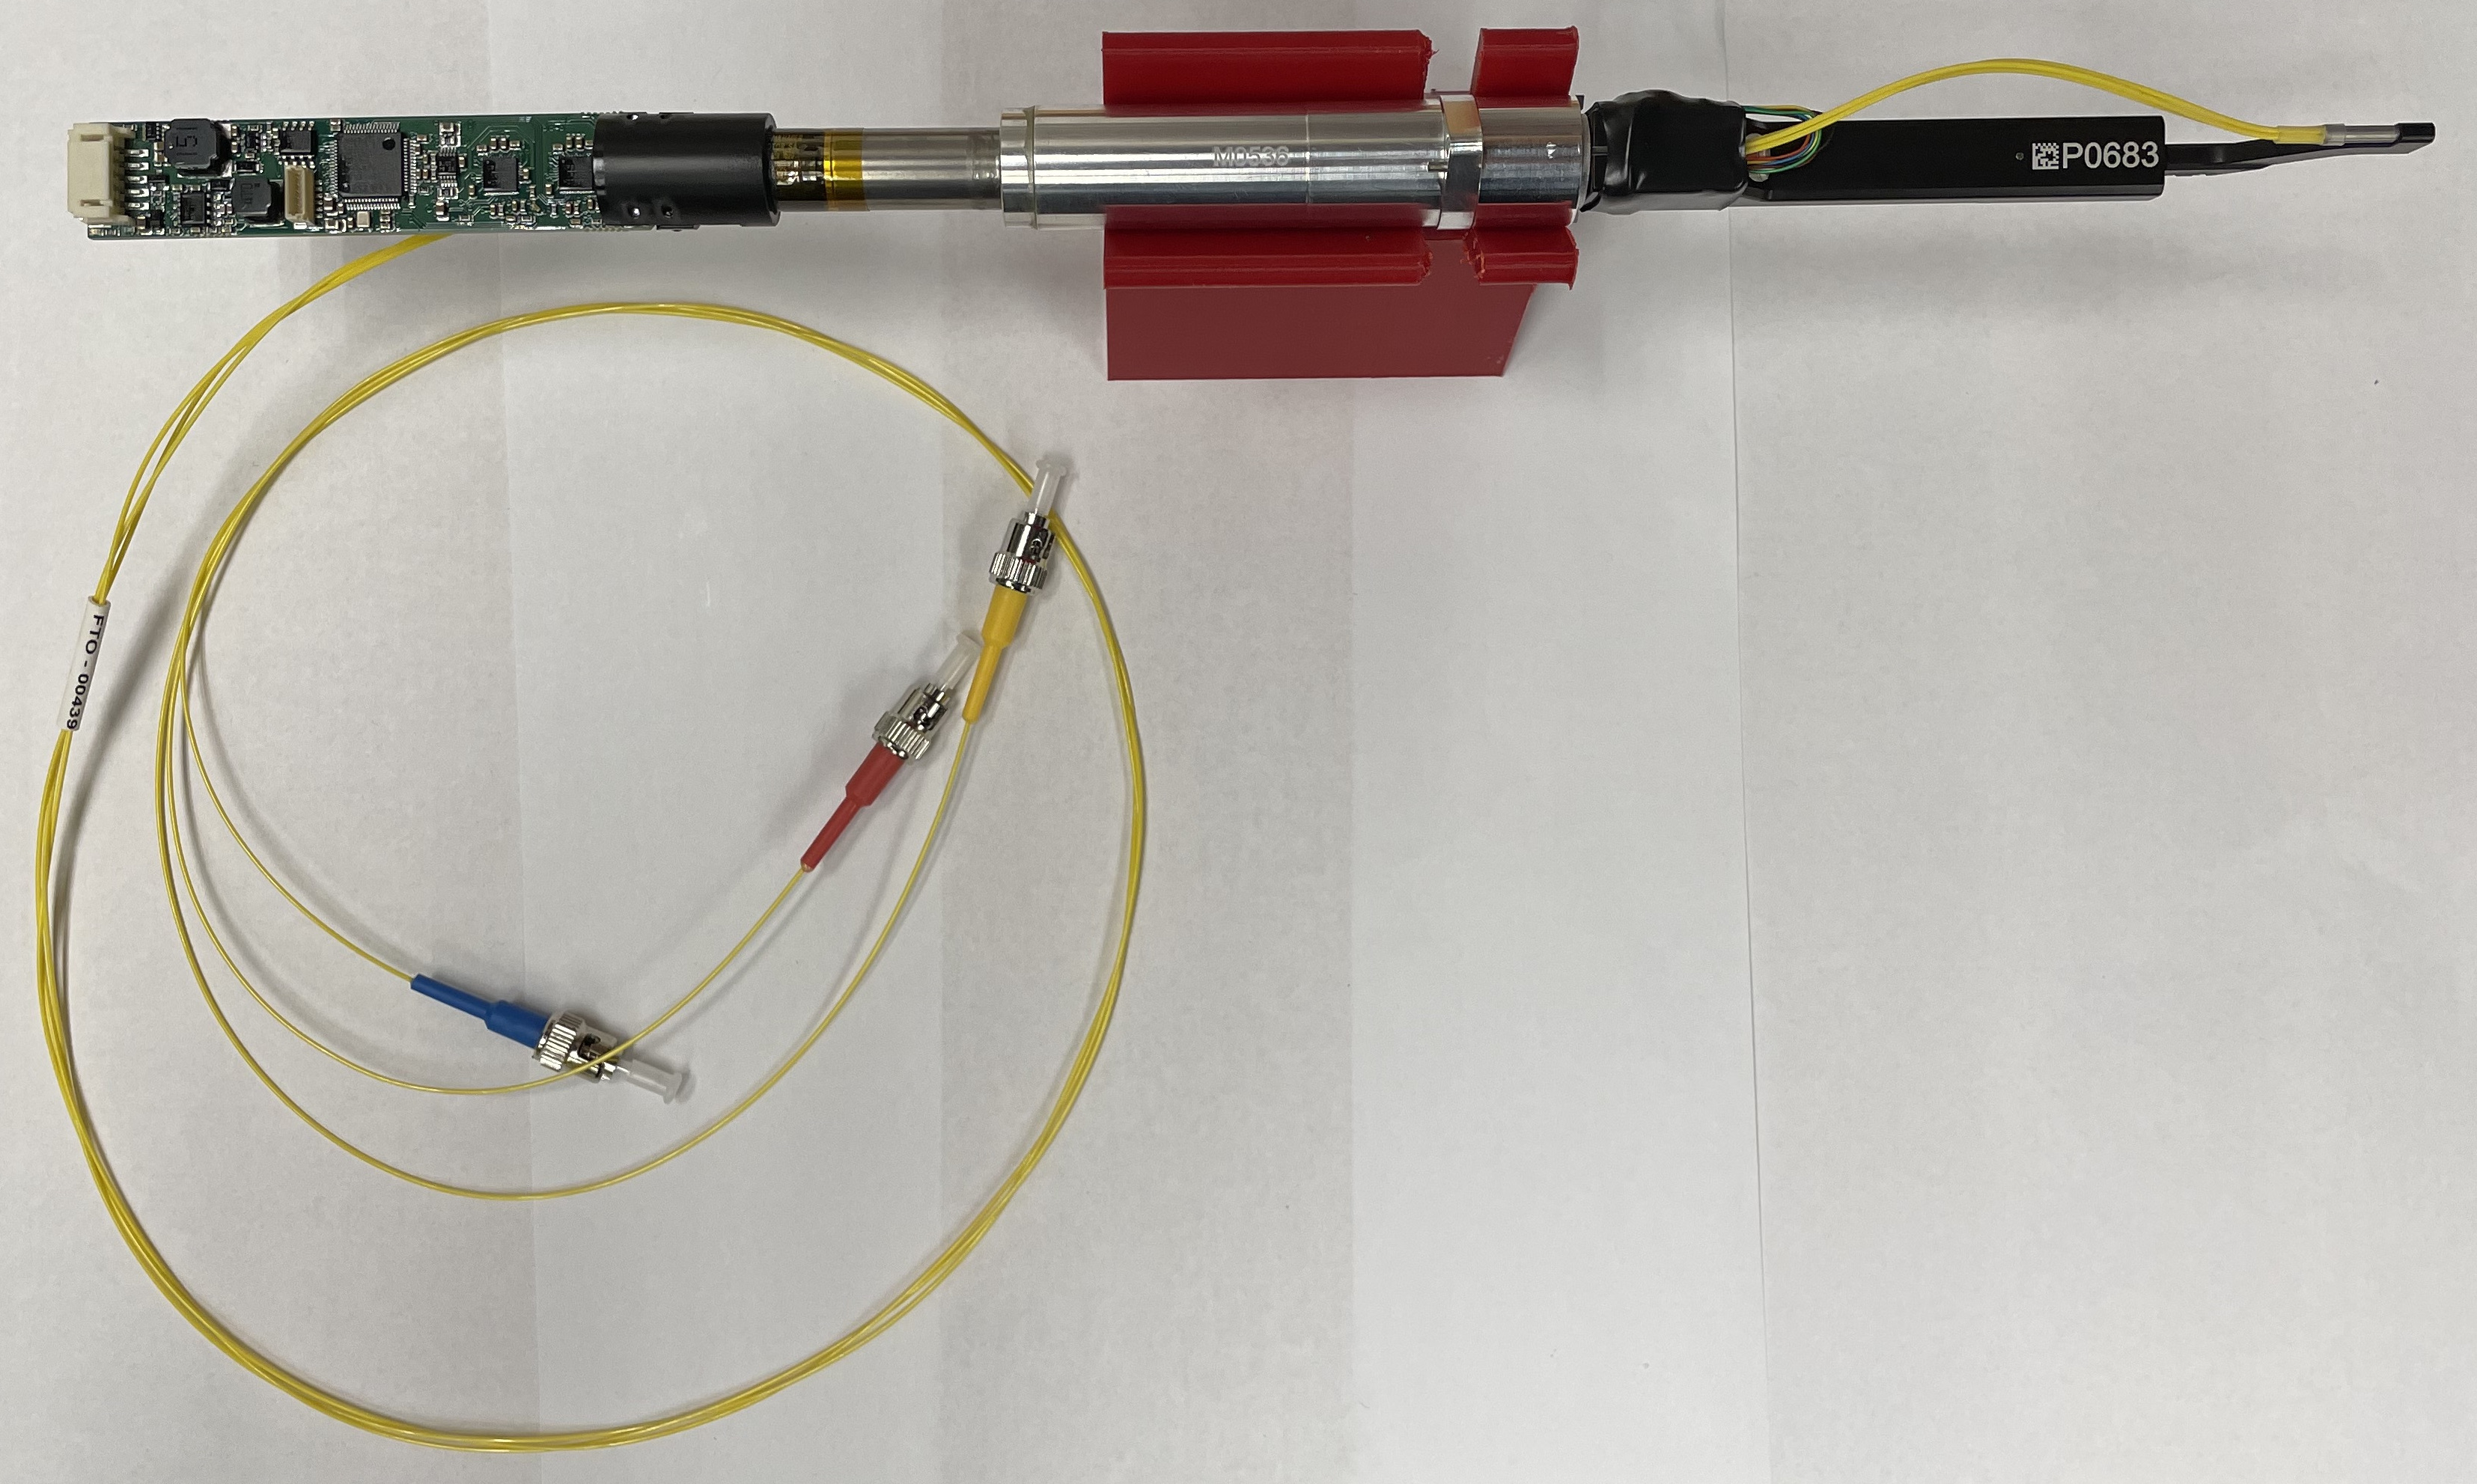 Photo of a robotic fiber positioner and optical fiber assembly.